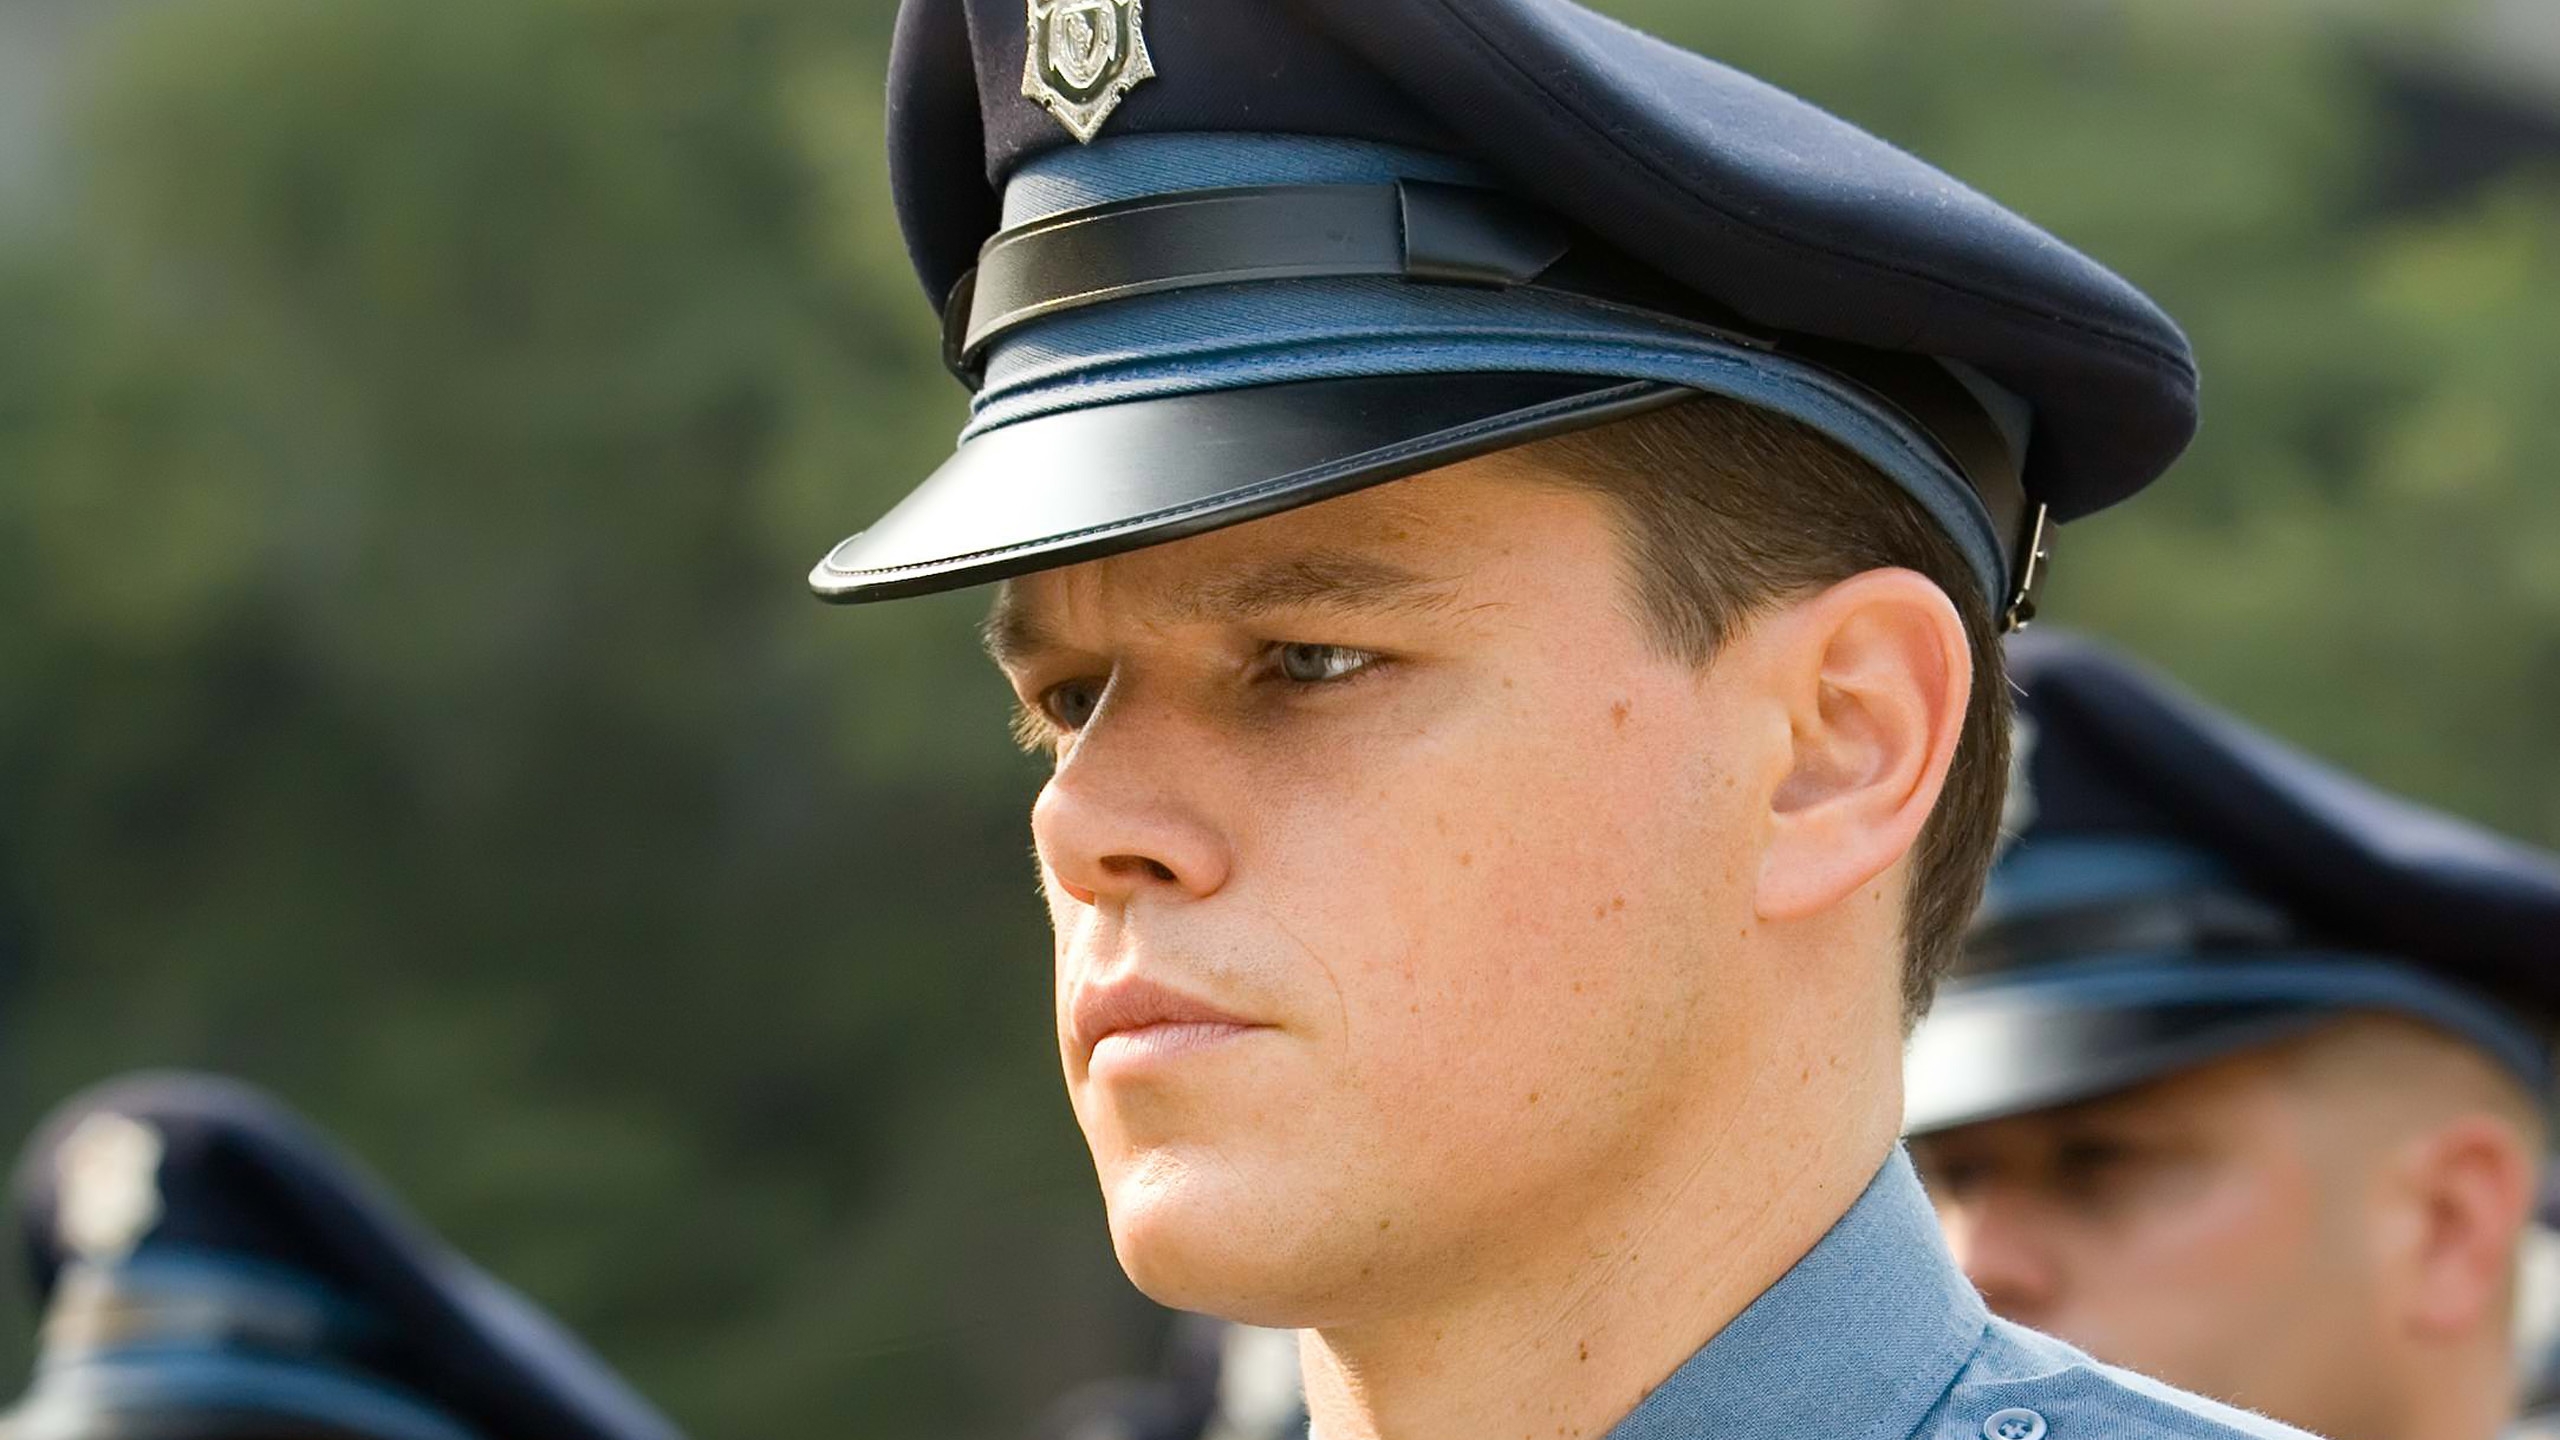 Matt Damon Cop for 2560x1440 HDTV resolution